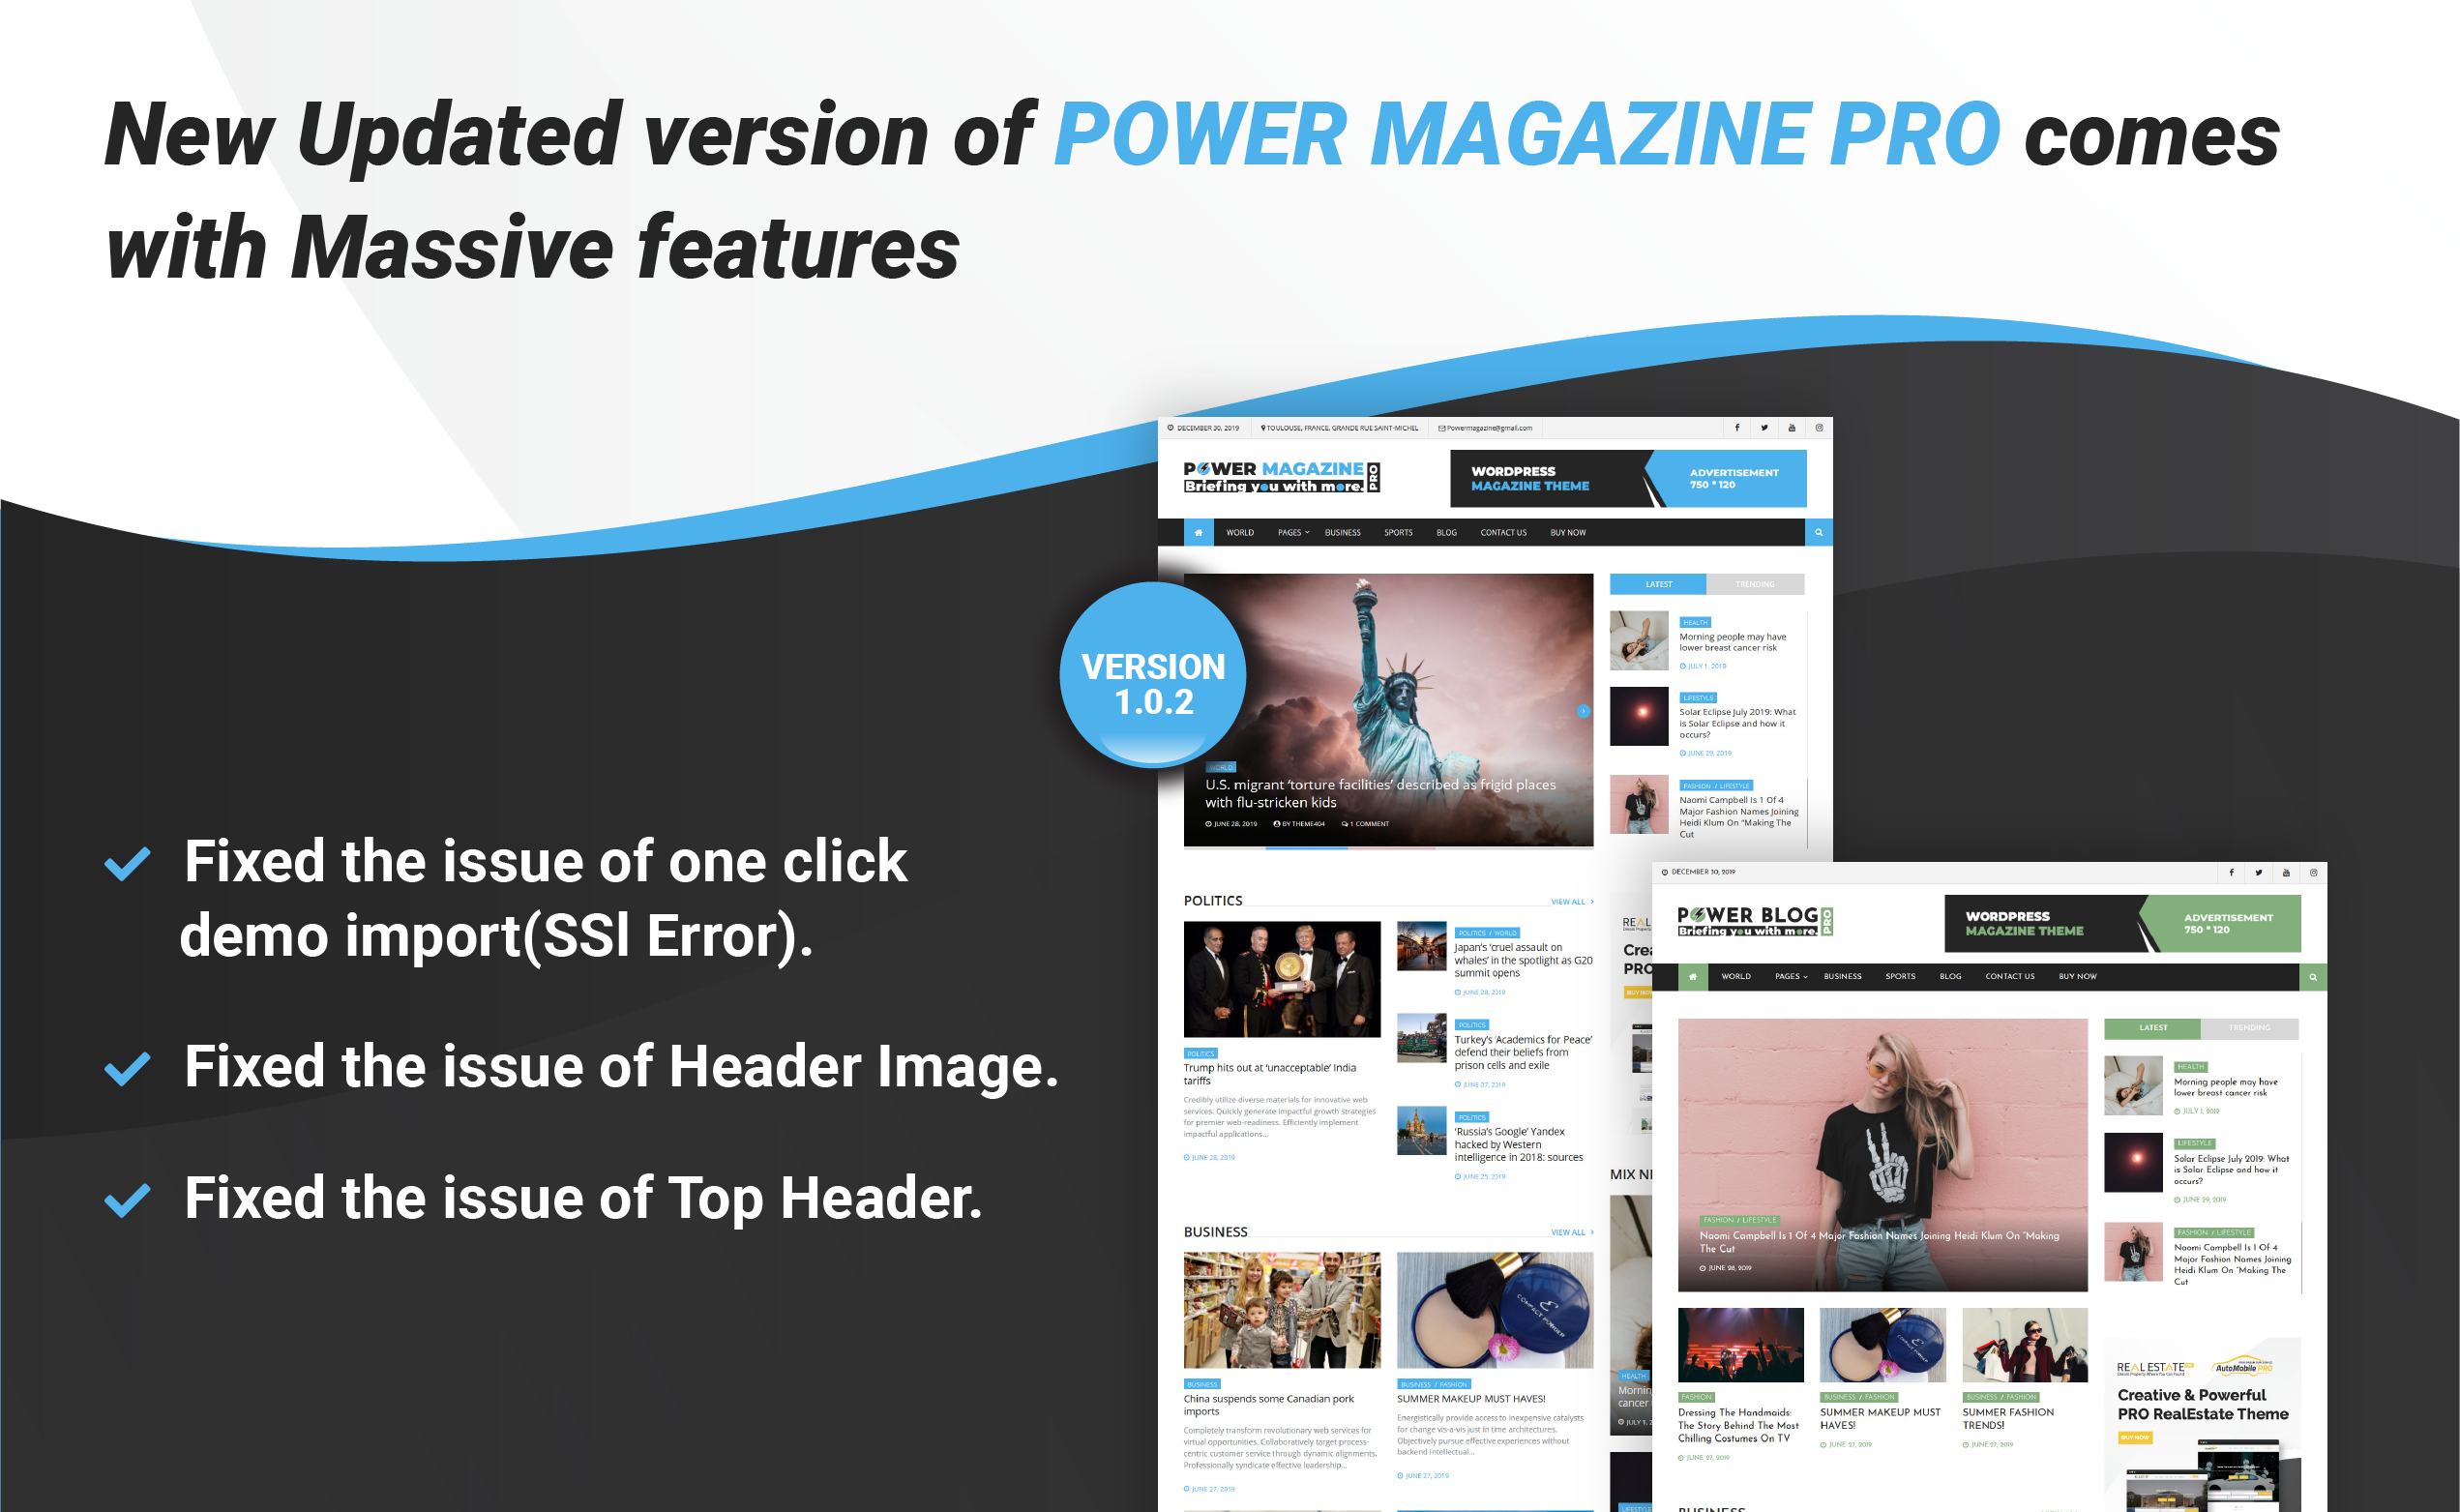 Power Magazine Pro Update